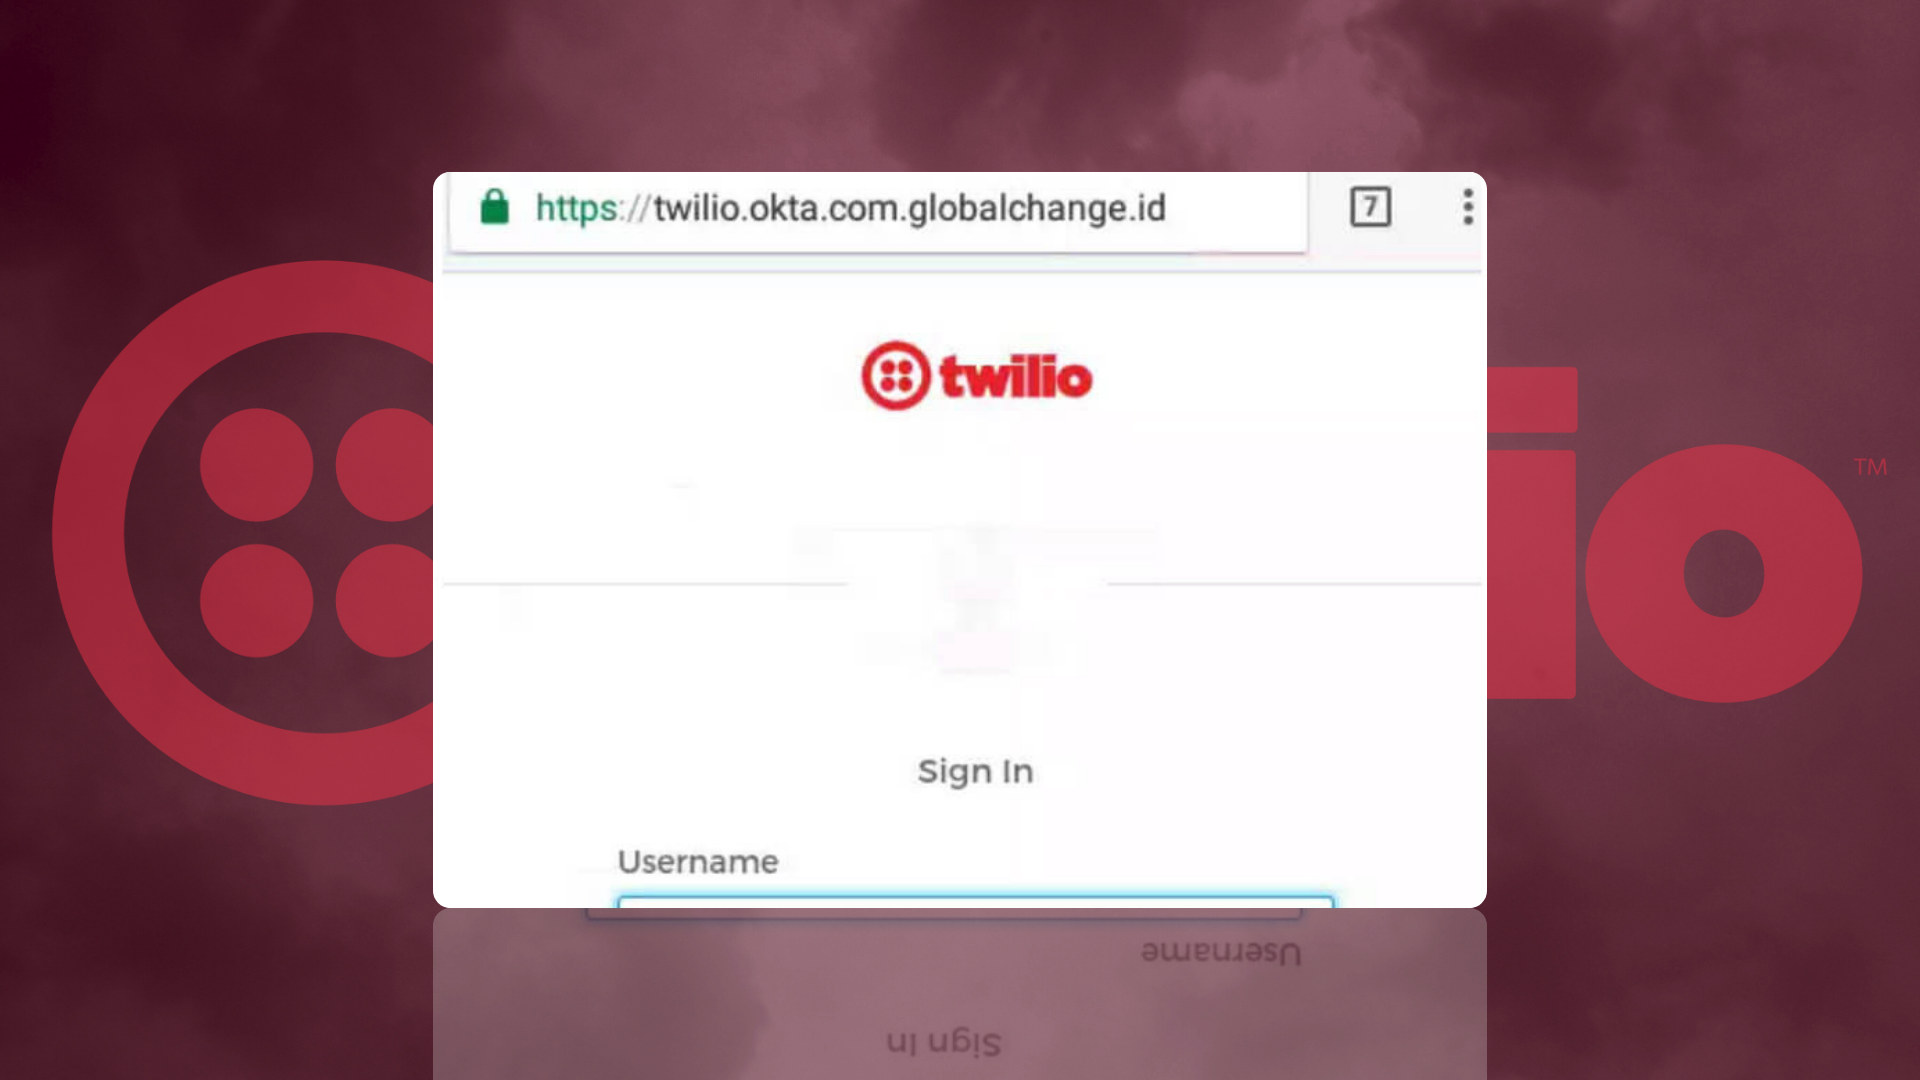 Twilio phishing page